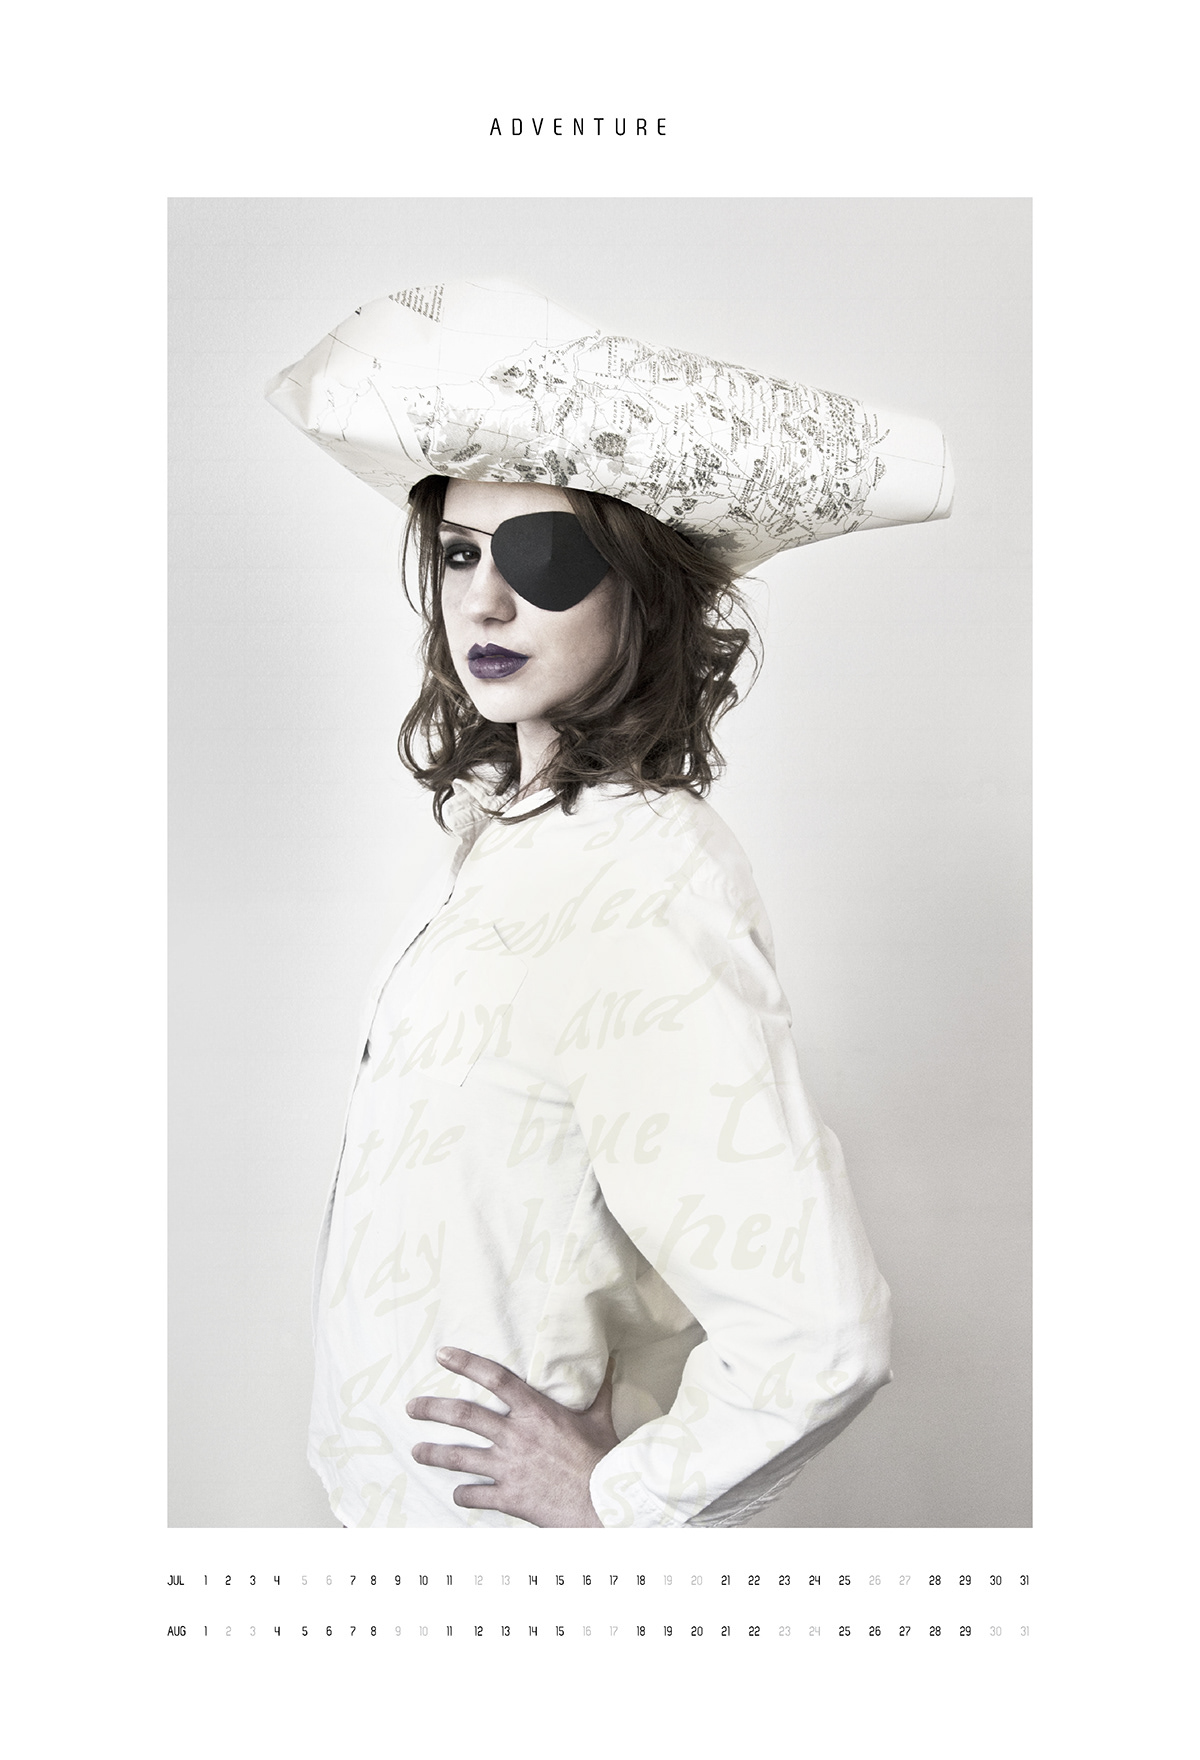 comic  paper  paper clothes  cape dress fan pirate map mask horror Princess fairytale detective trenchcoat